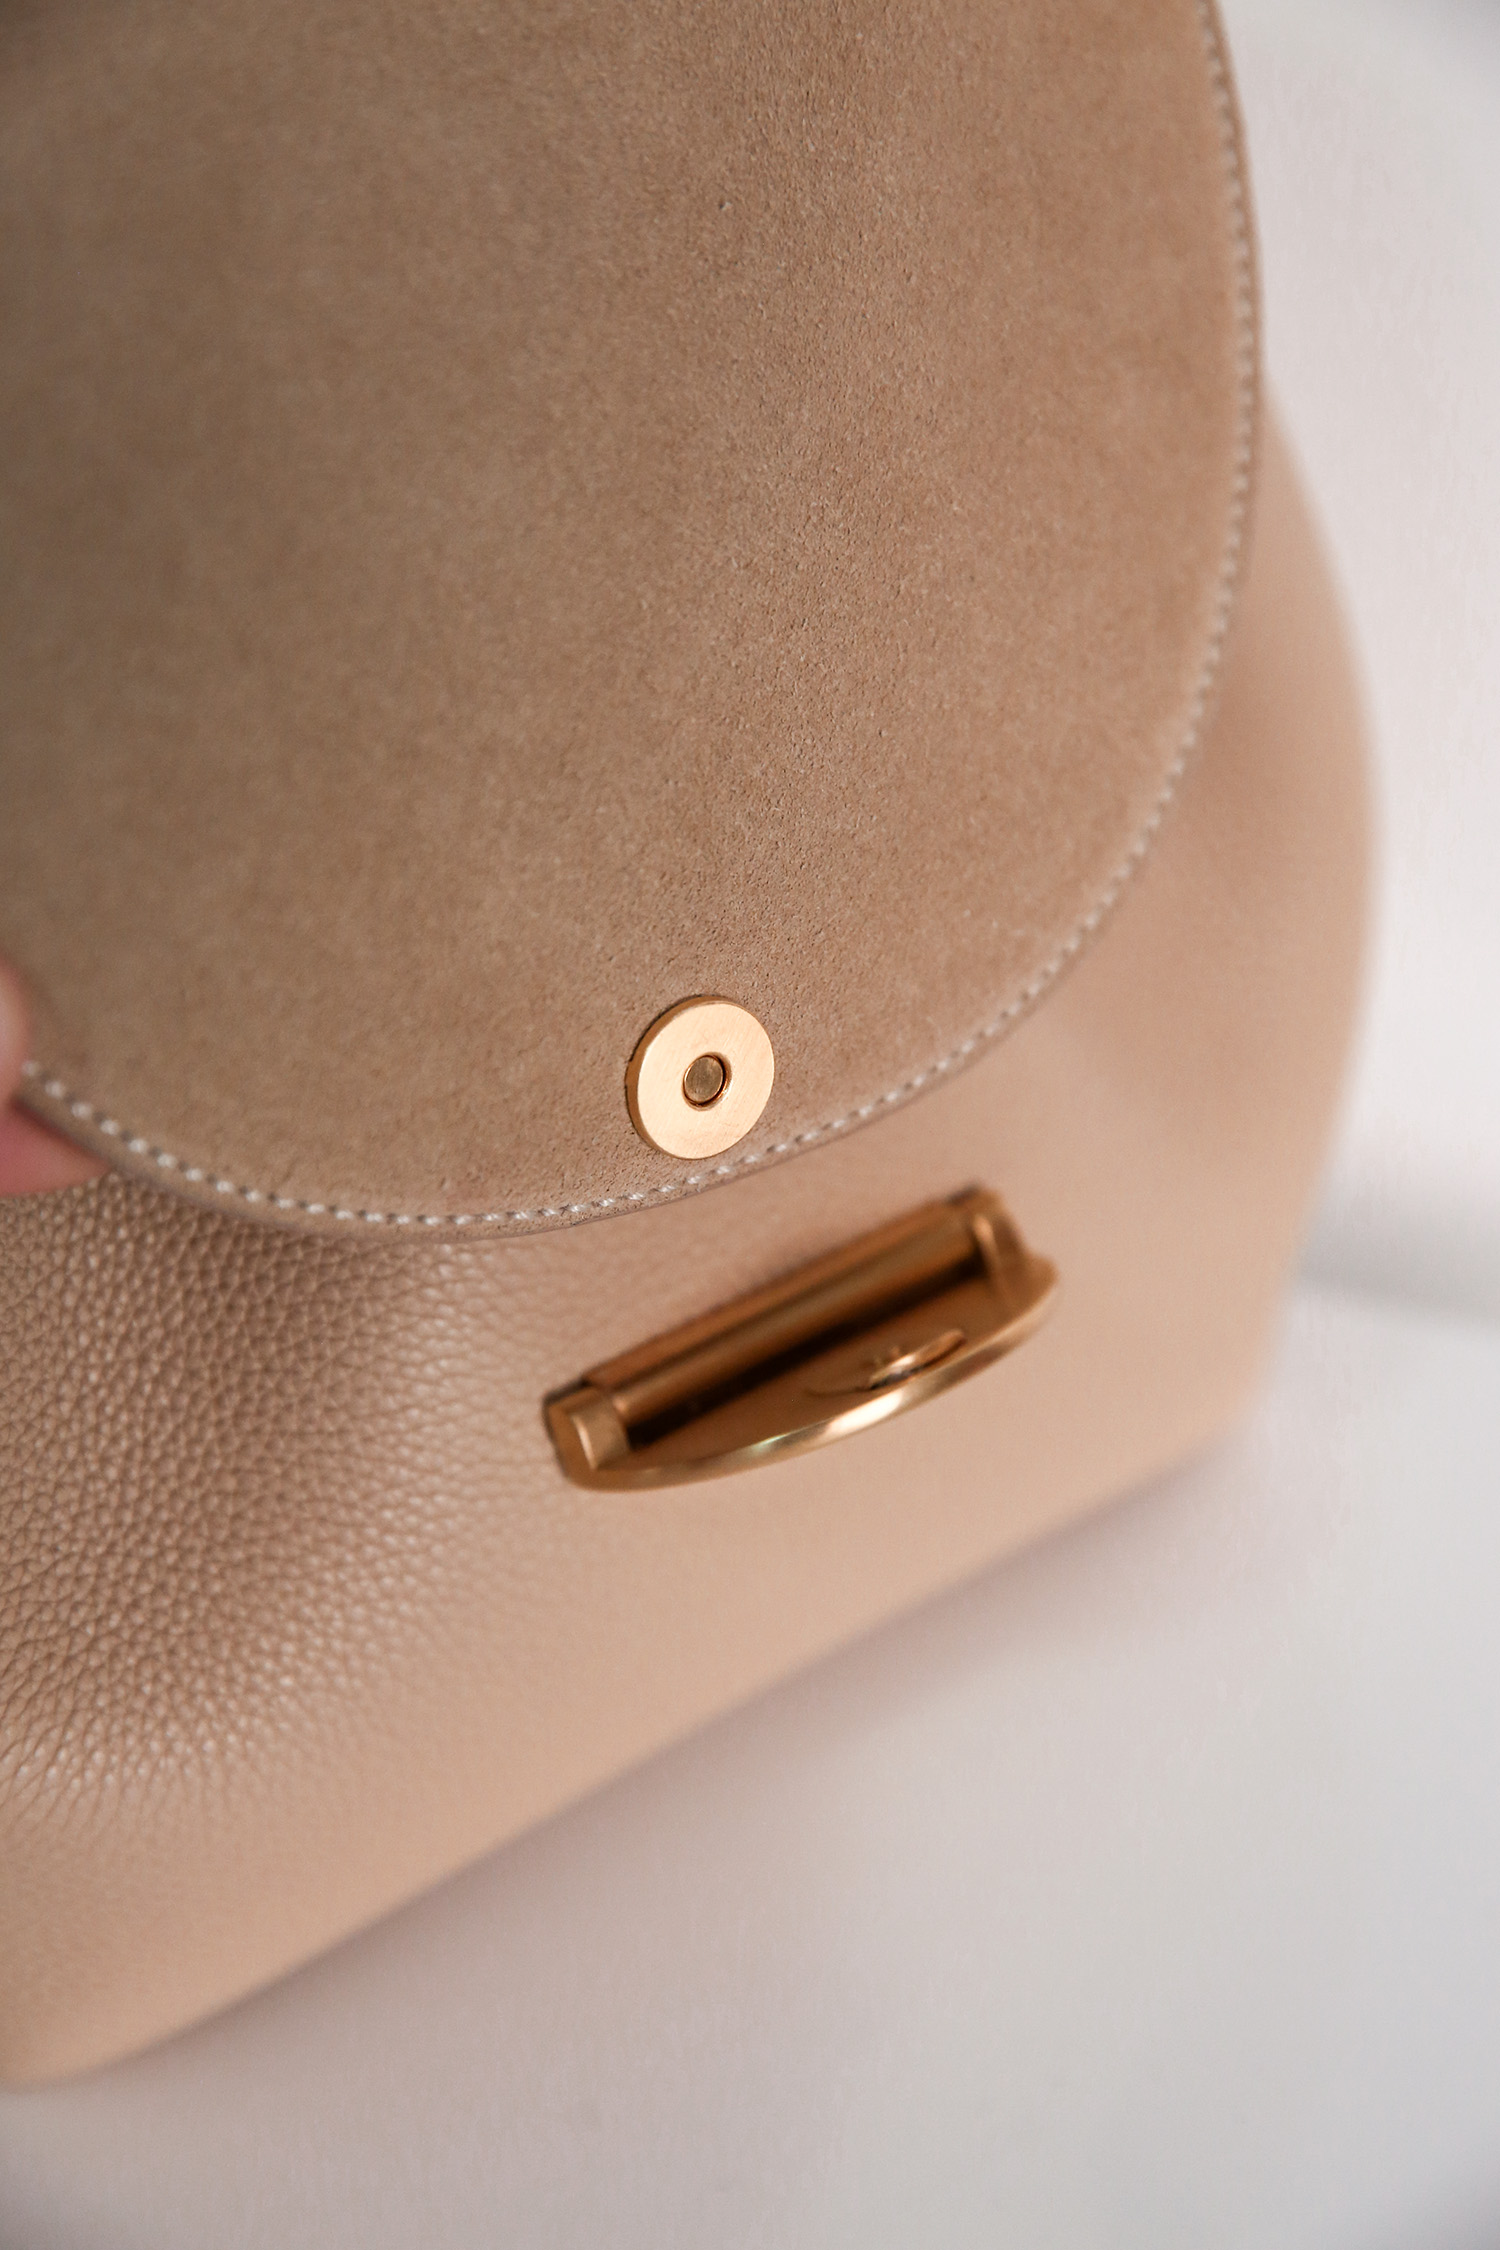 Polene Number One Mini Bag Review - Mademoiselle | Minimal Style Blog